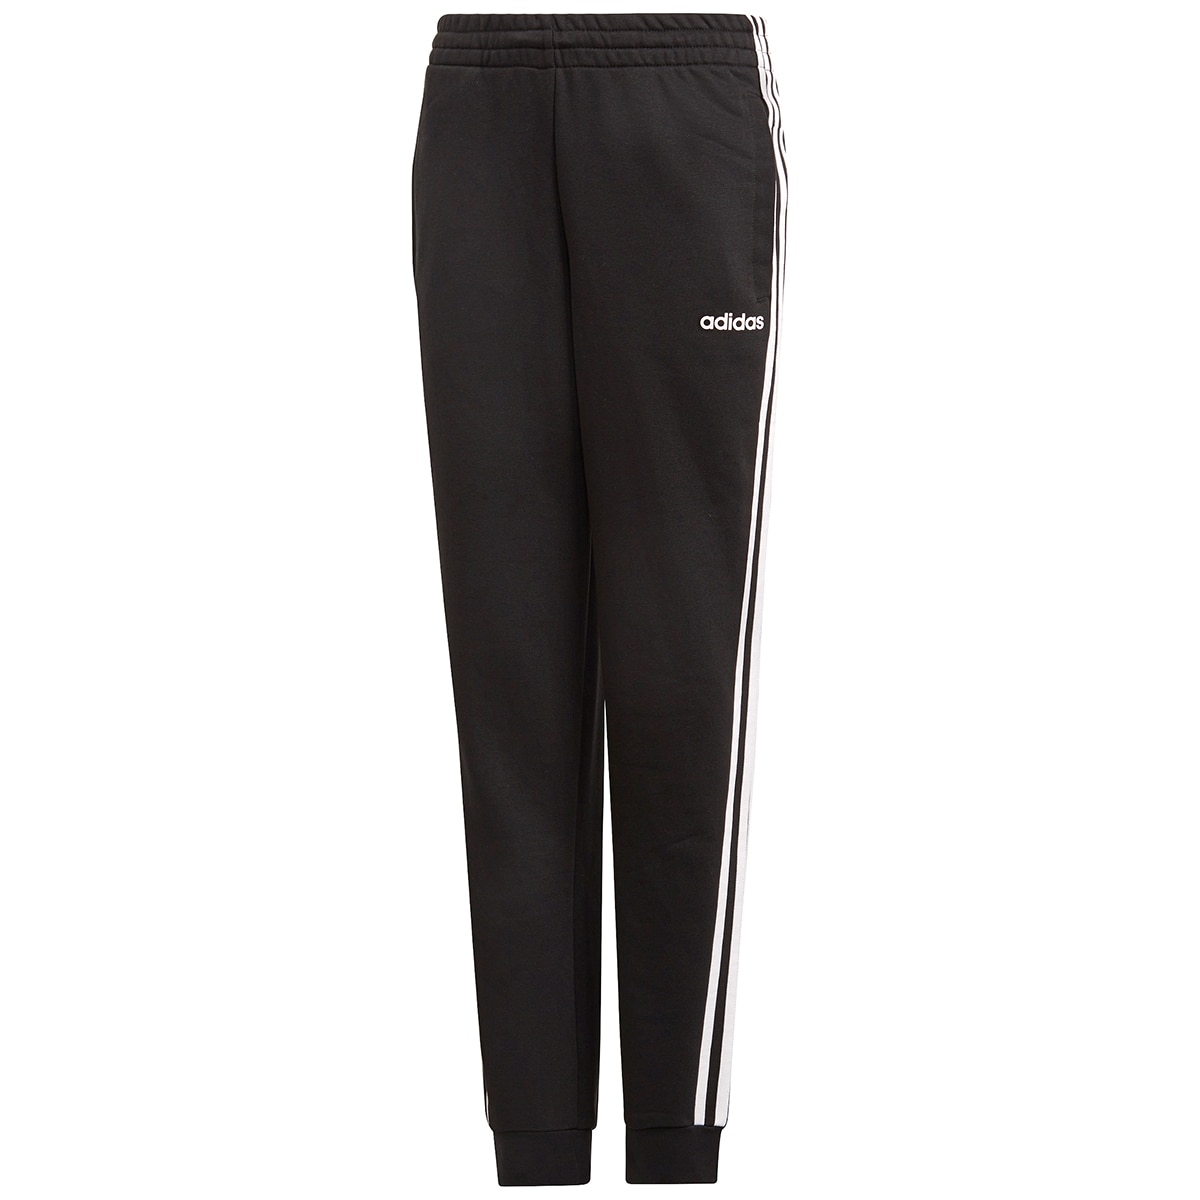 Adidas Girls' 3S Track Pants - Black White